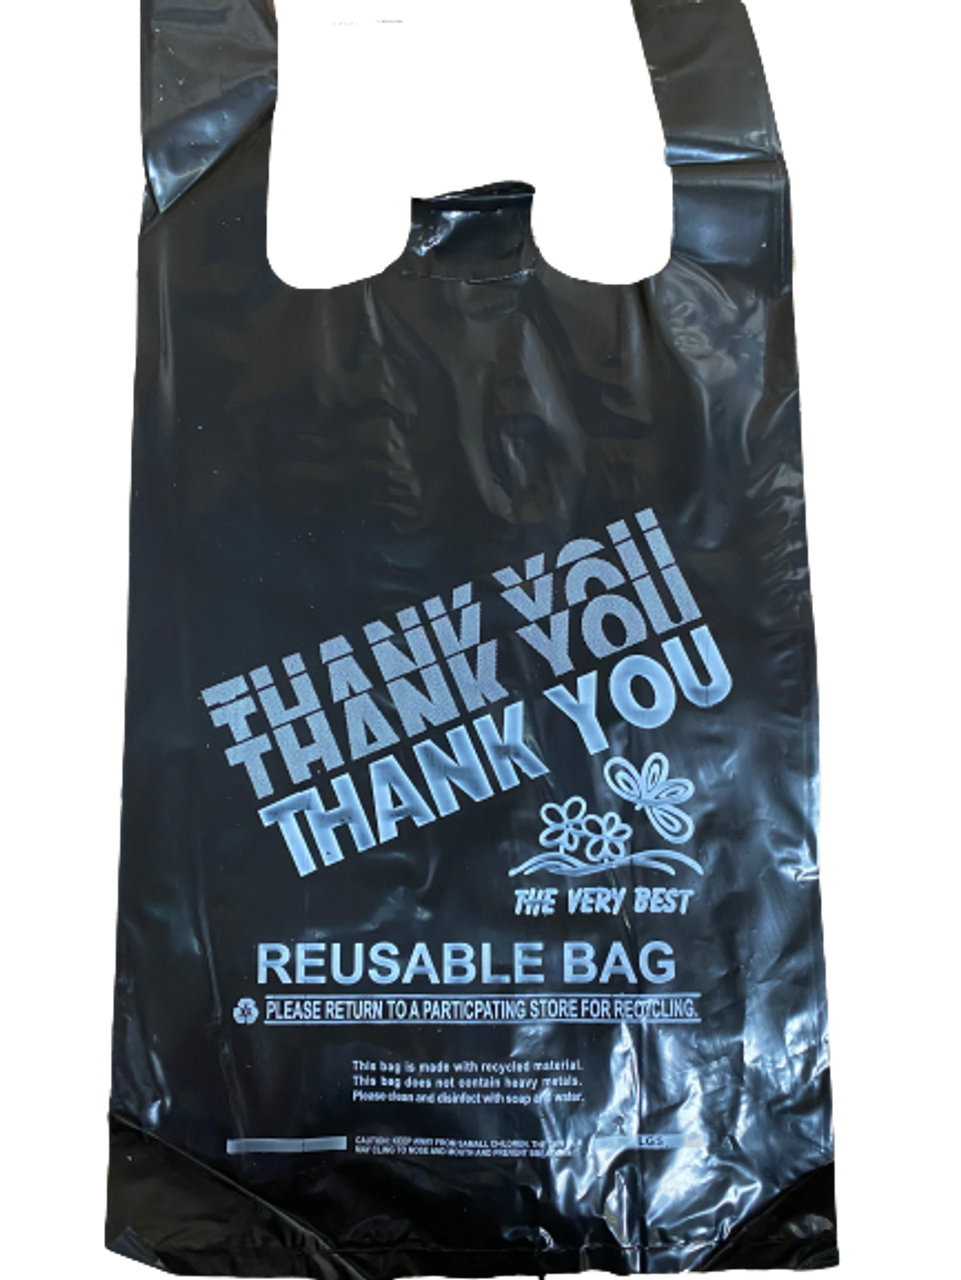 Reusable shopping bag - Top png files on